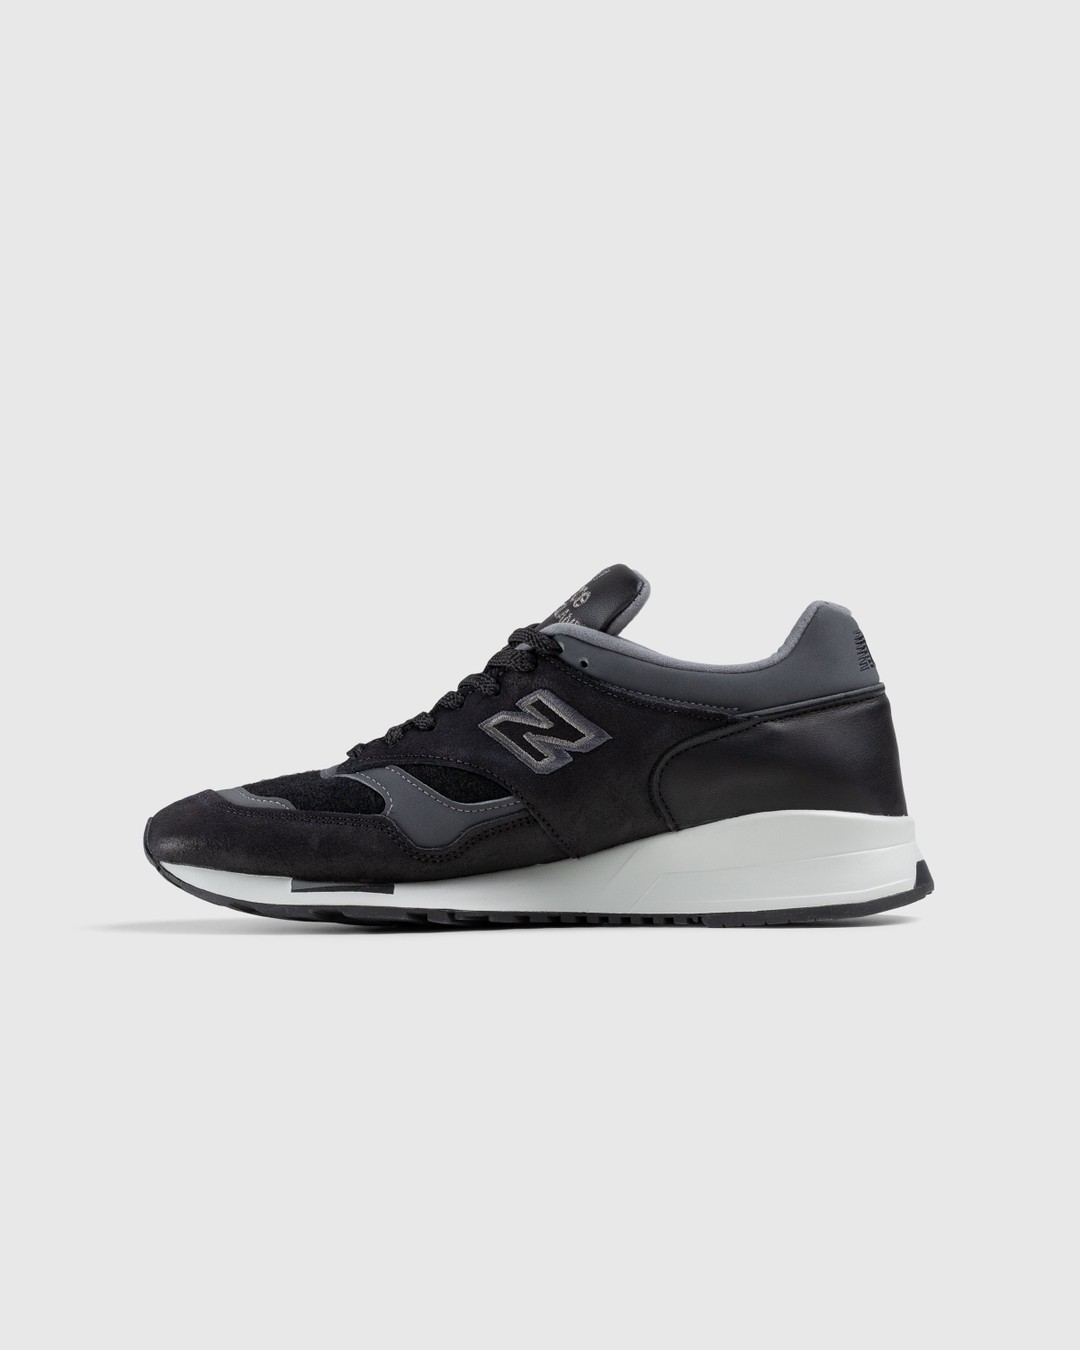 New Balance – M1500DJ Black/Grey - Low Top Sneakers - Black - Image 2